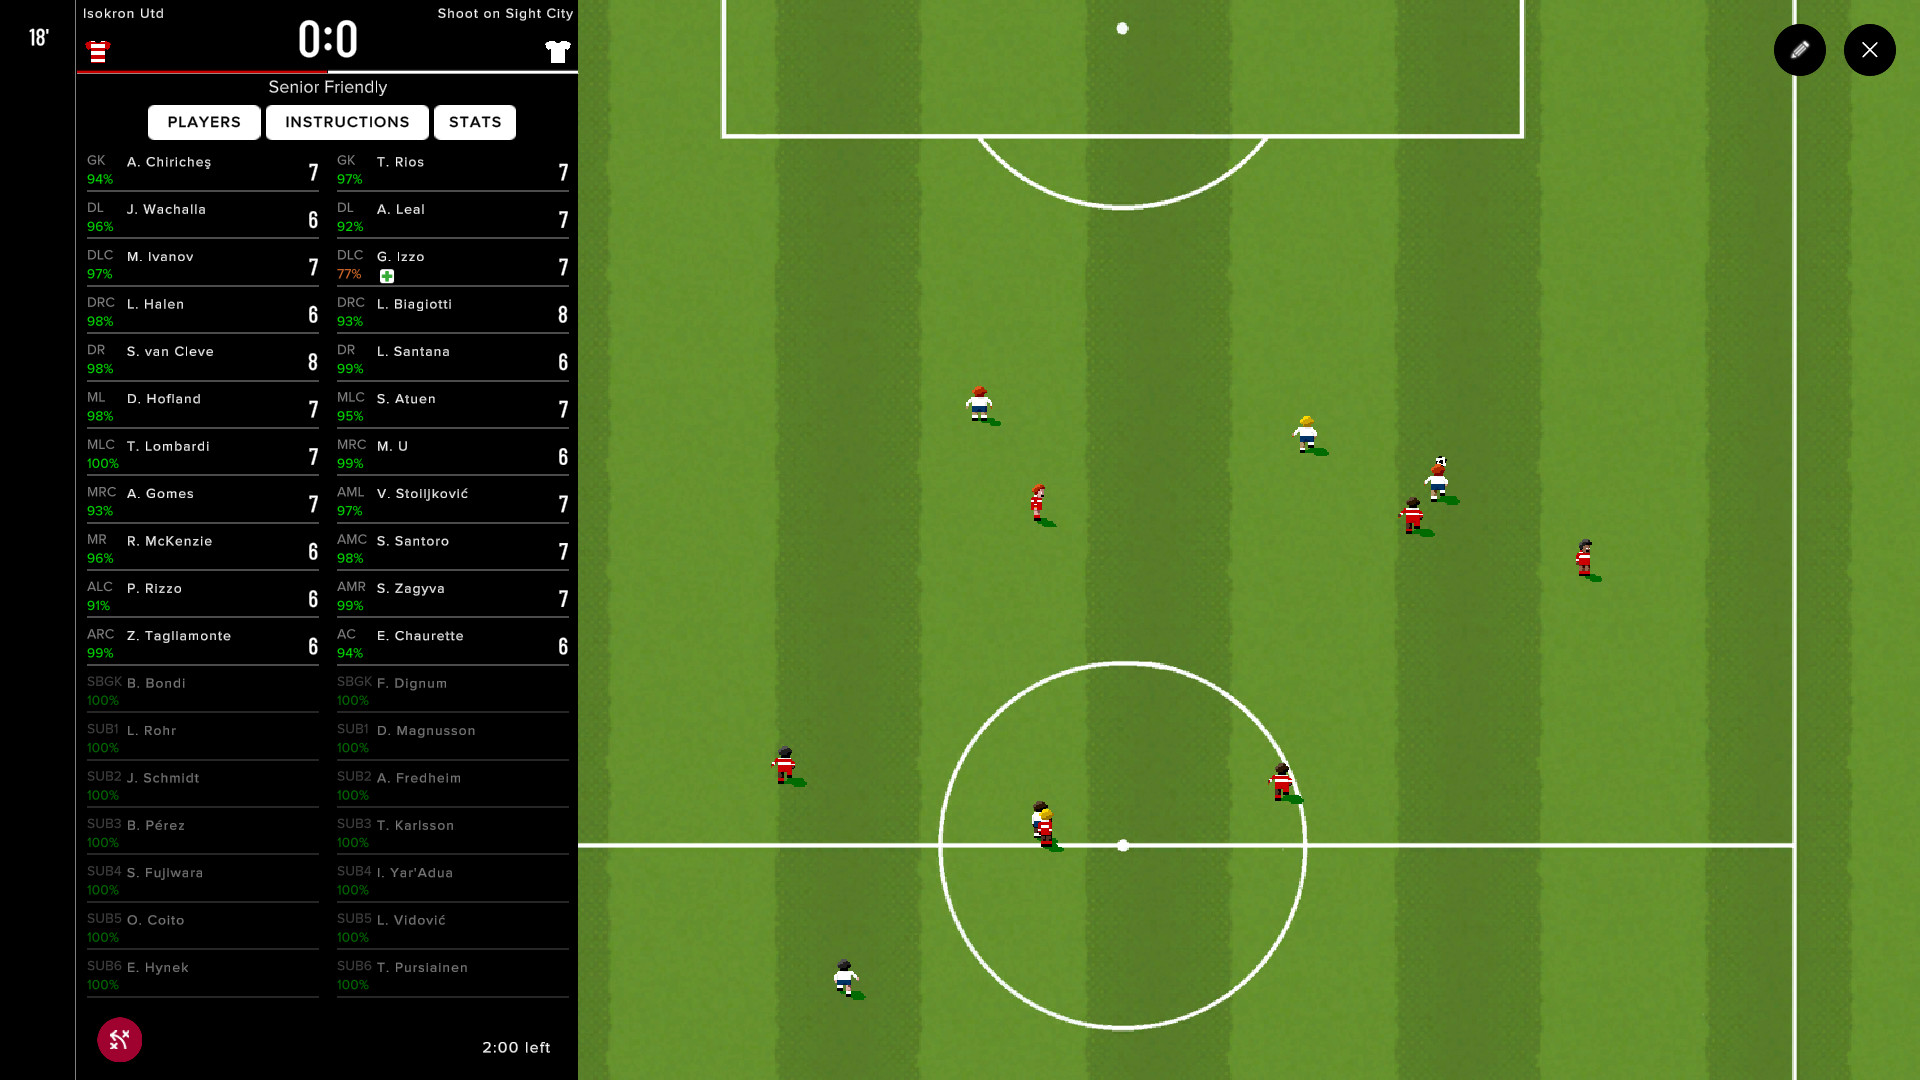 instal 90 Minute Fever - Online Football (Soccer) Manager